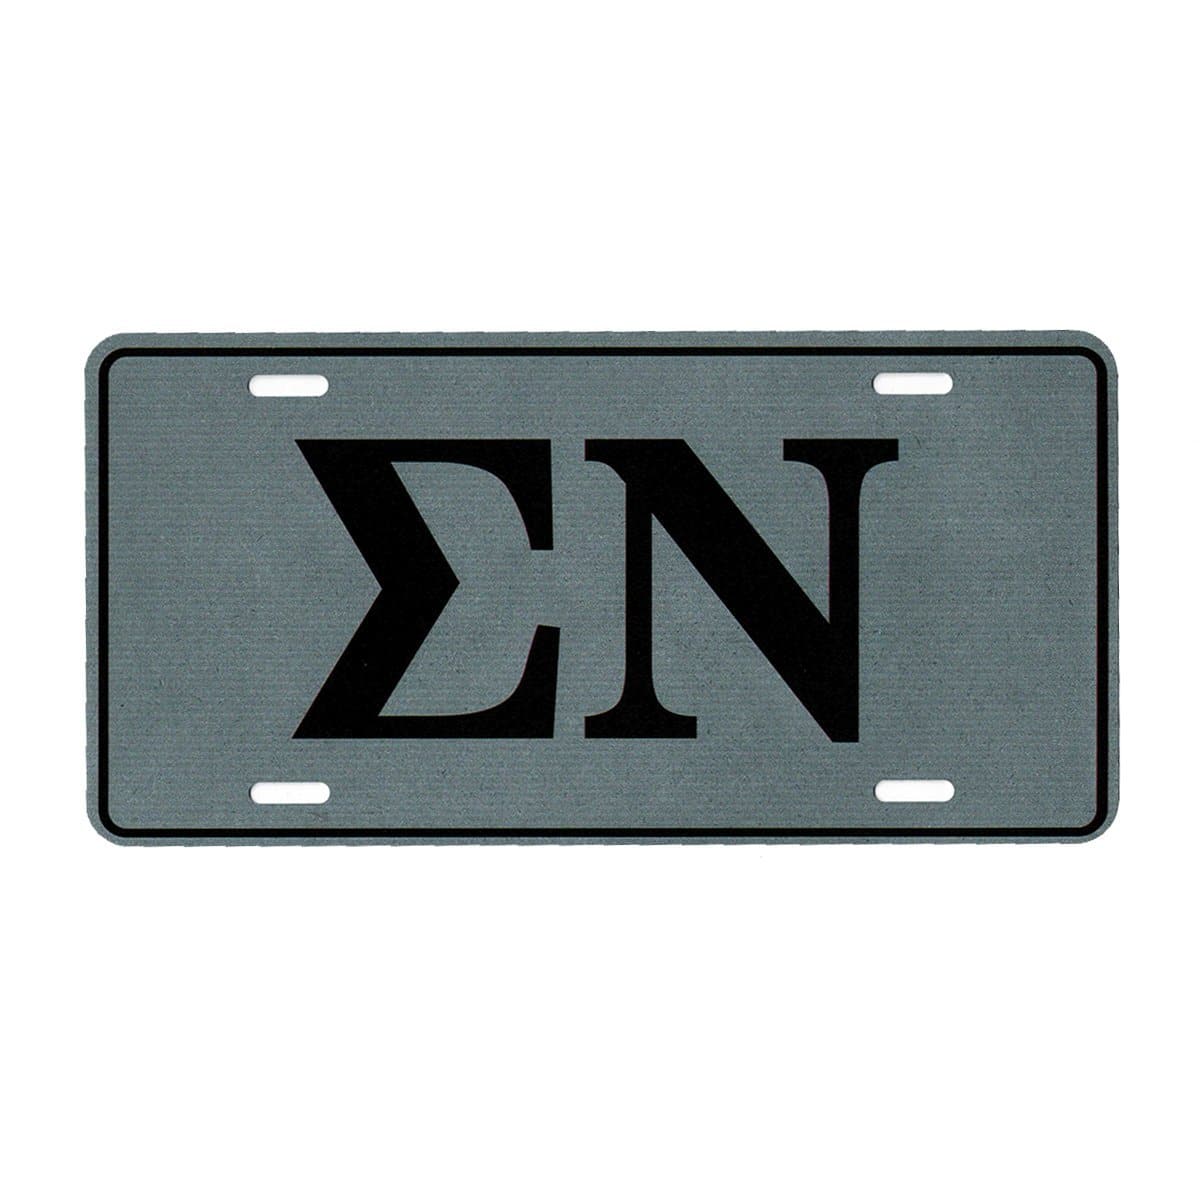 Sigma Nu License Plate | Sigma Nu | Car accessories > Decorative license plates